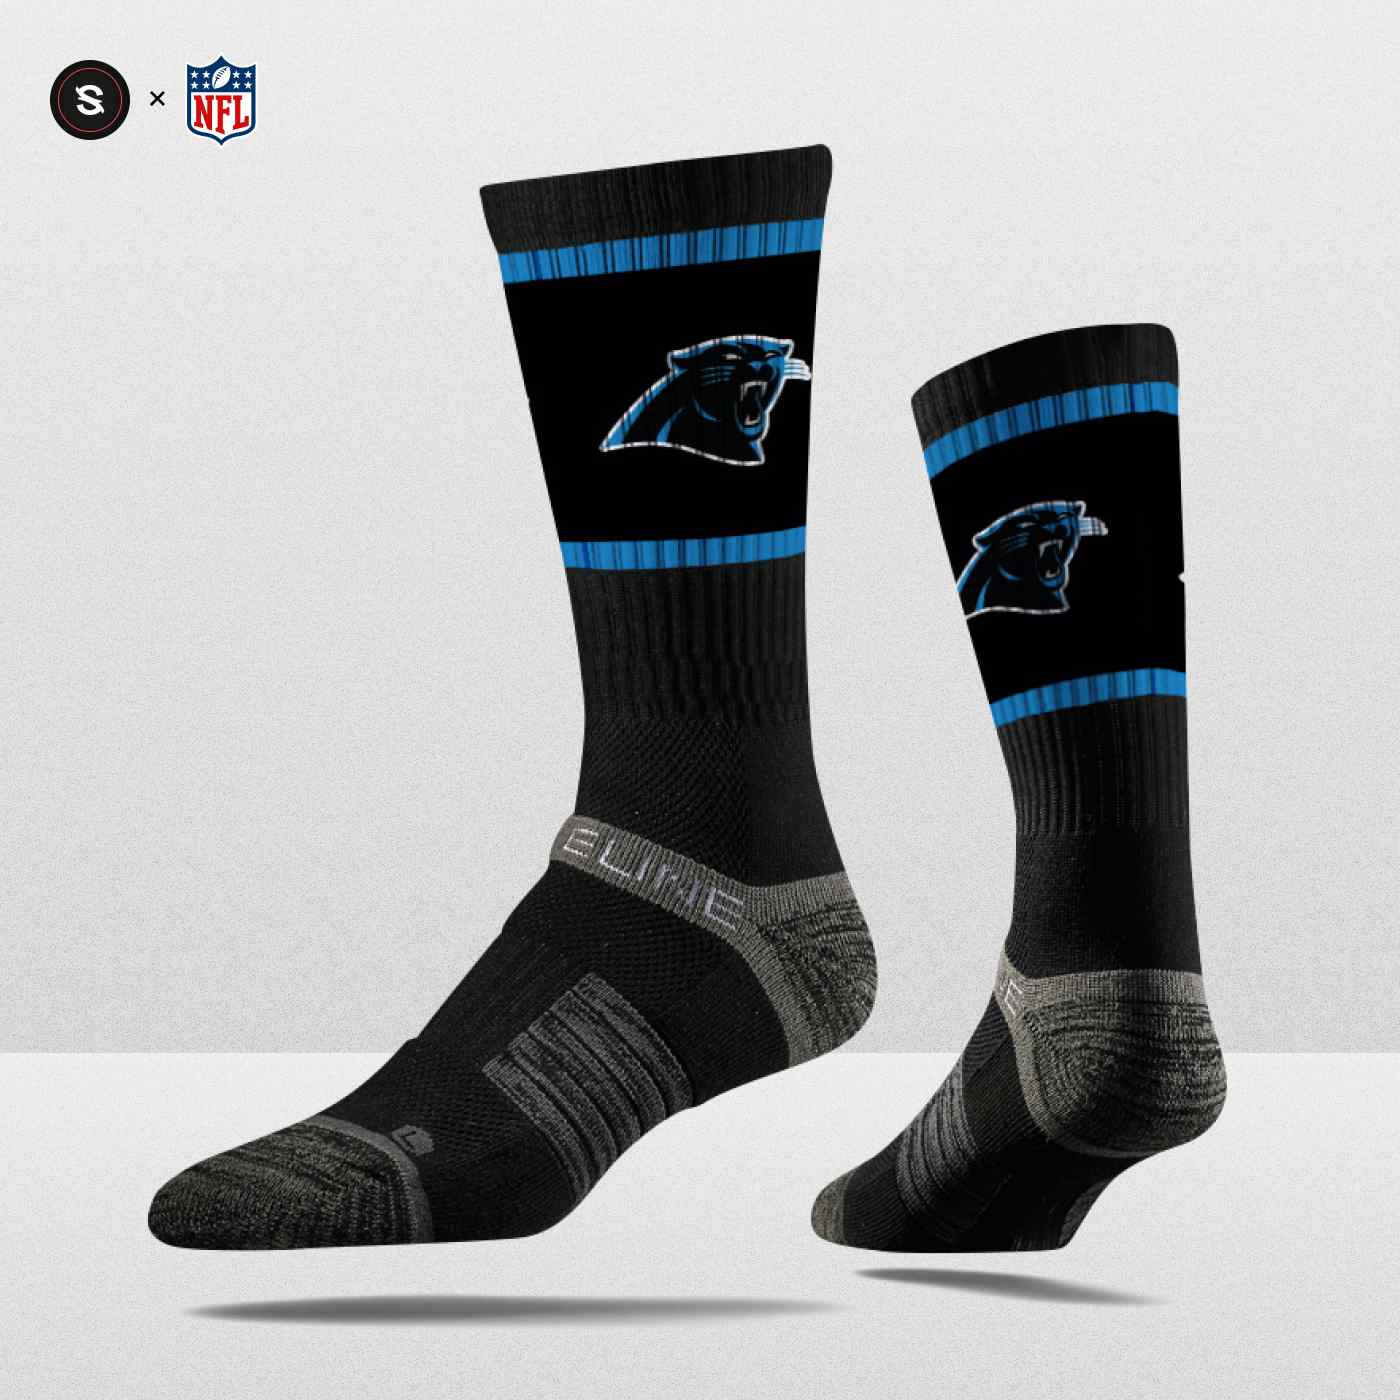 Carolina Panthers socks